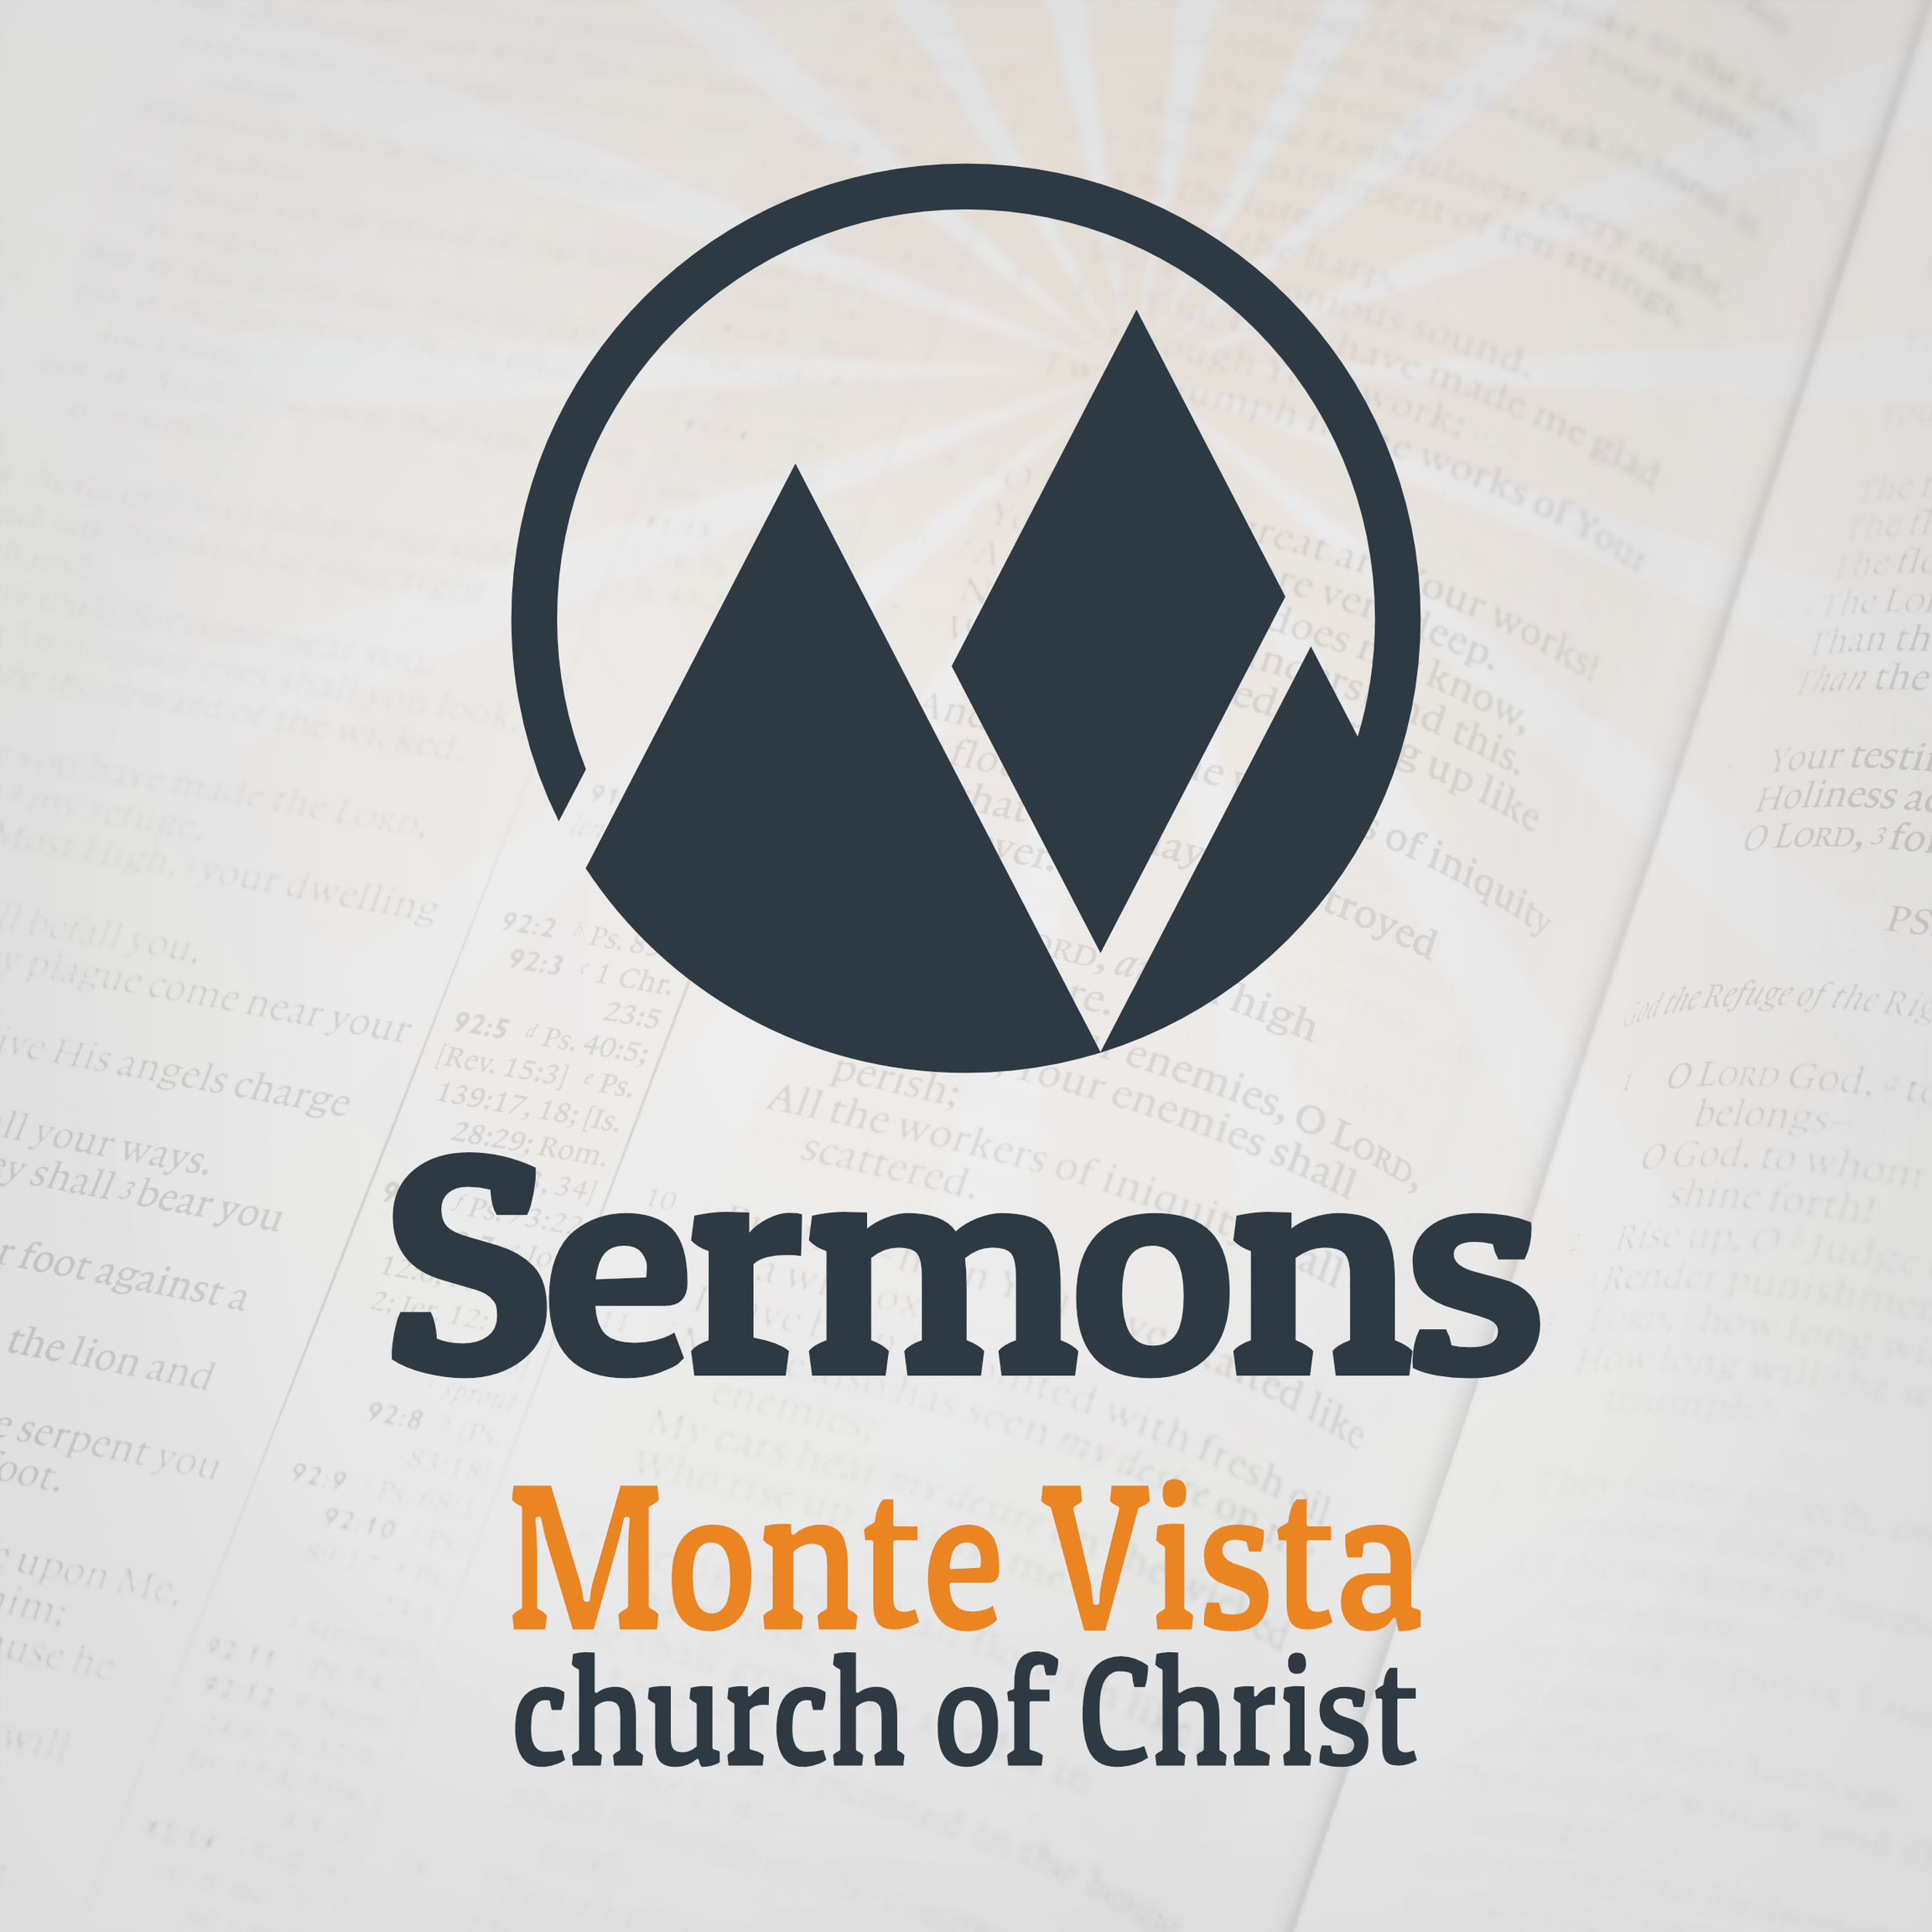 Sermons by the Monte Vista church of Christ